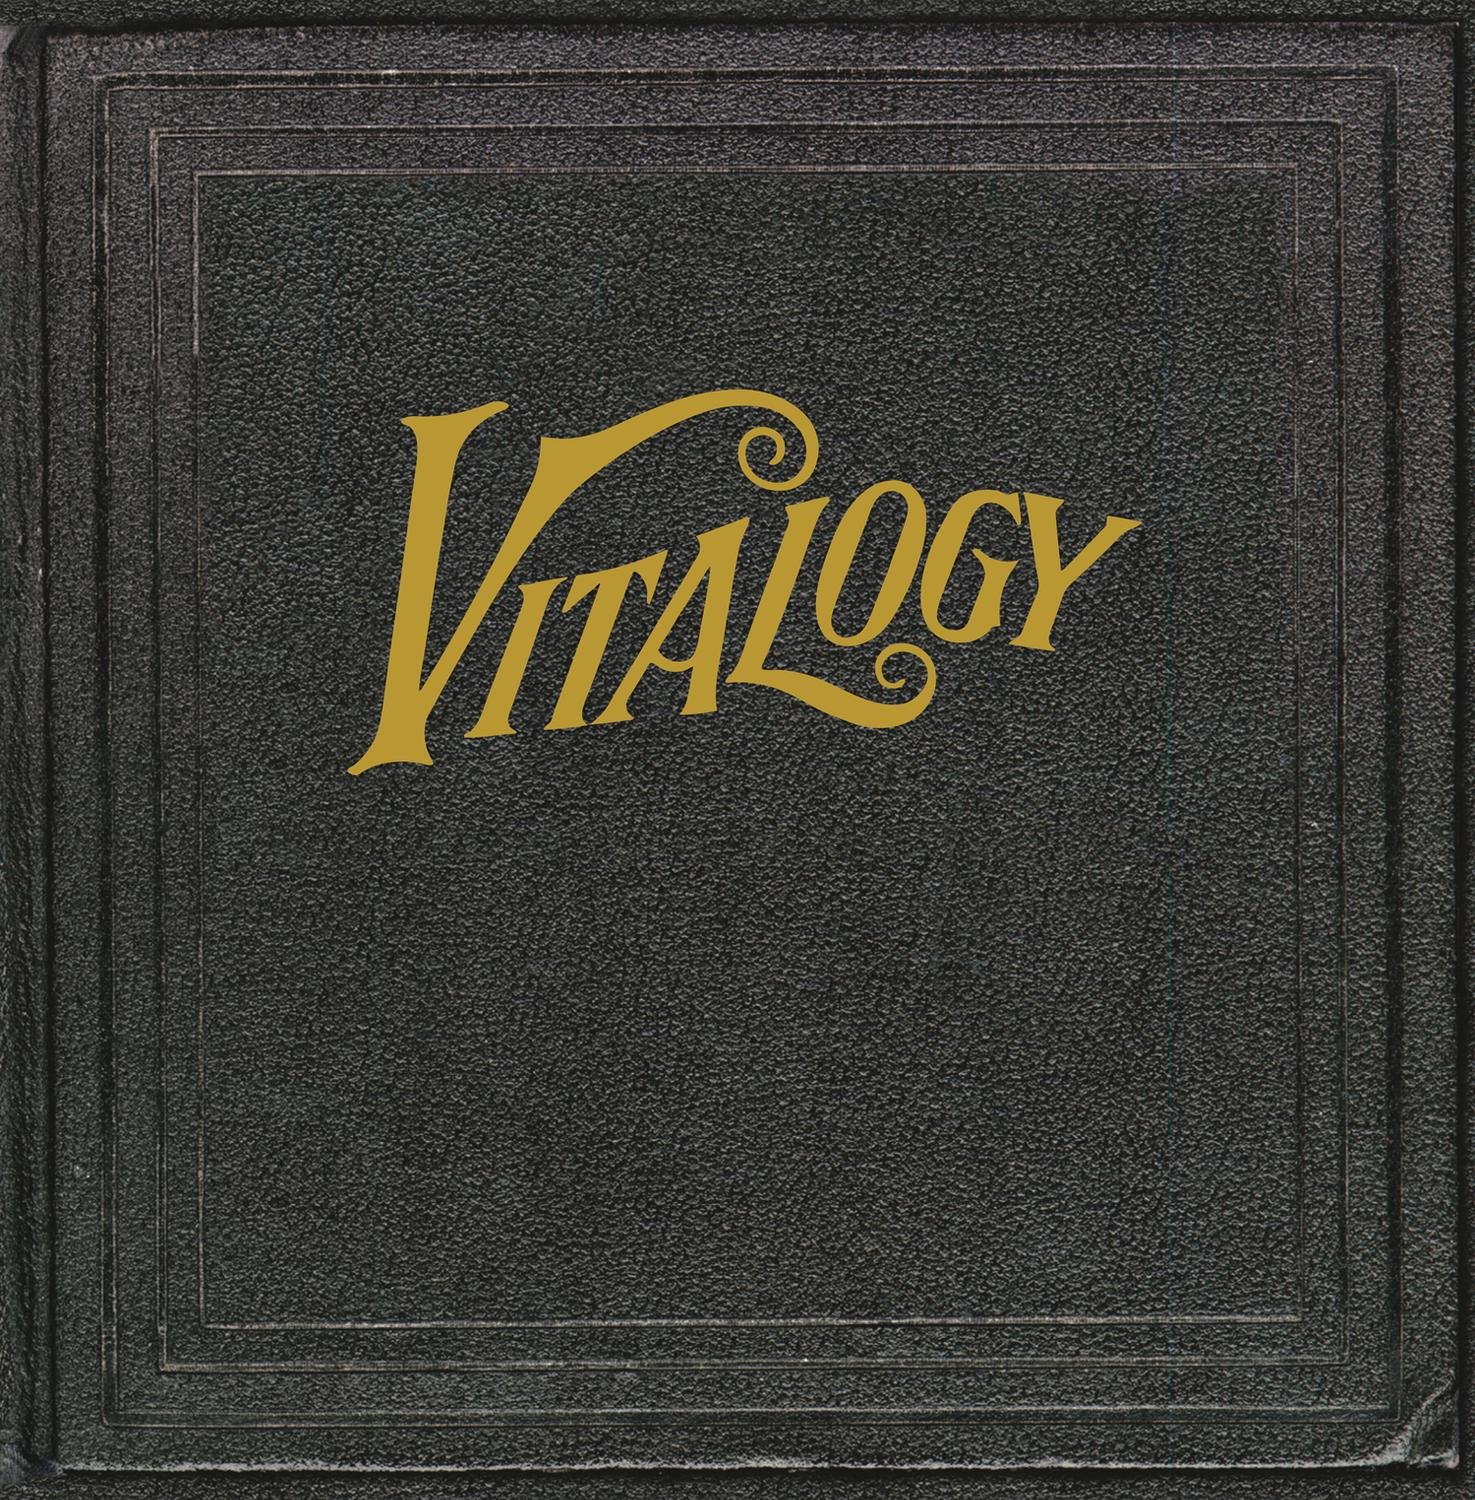 Pearl Jam "Vitalogy" 2LP